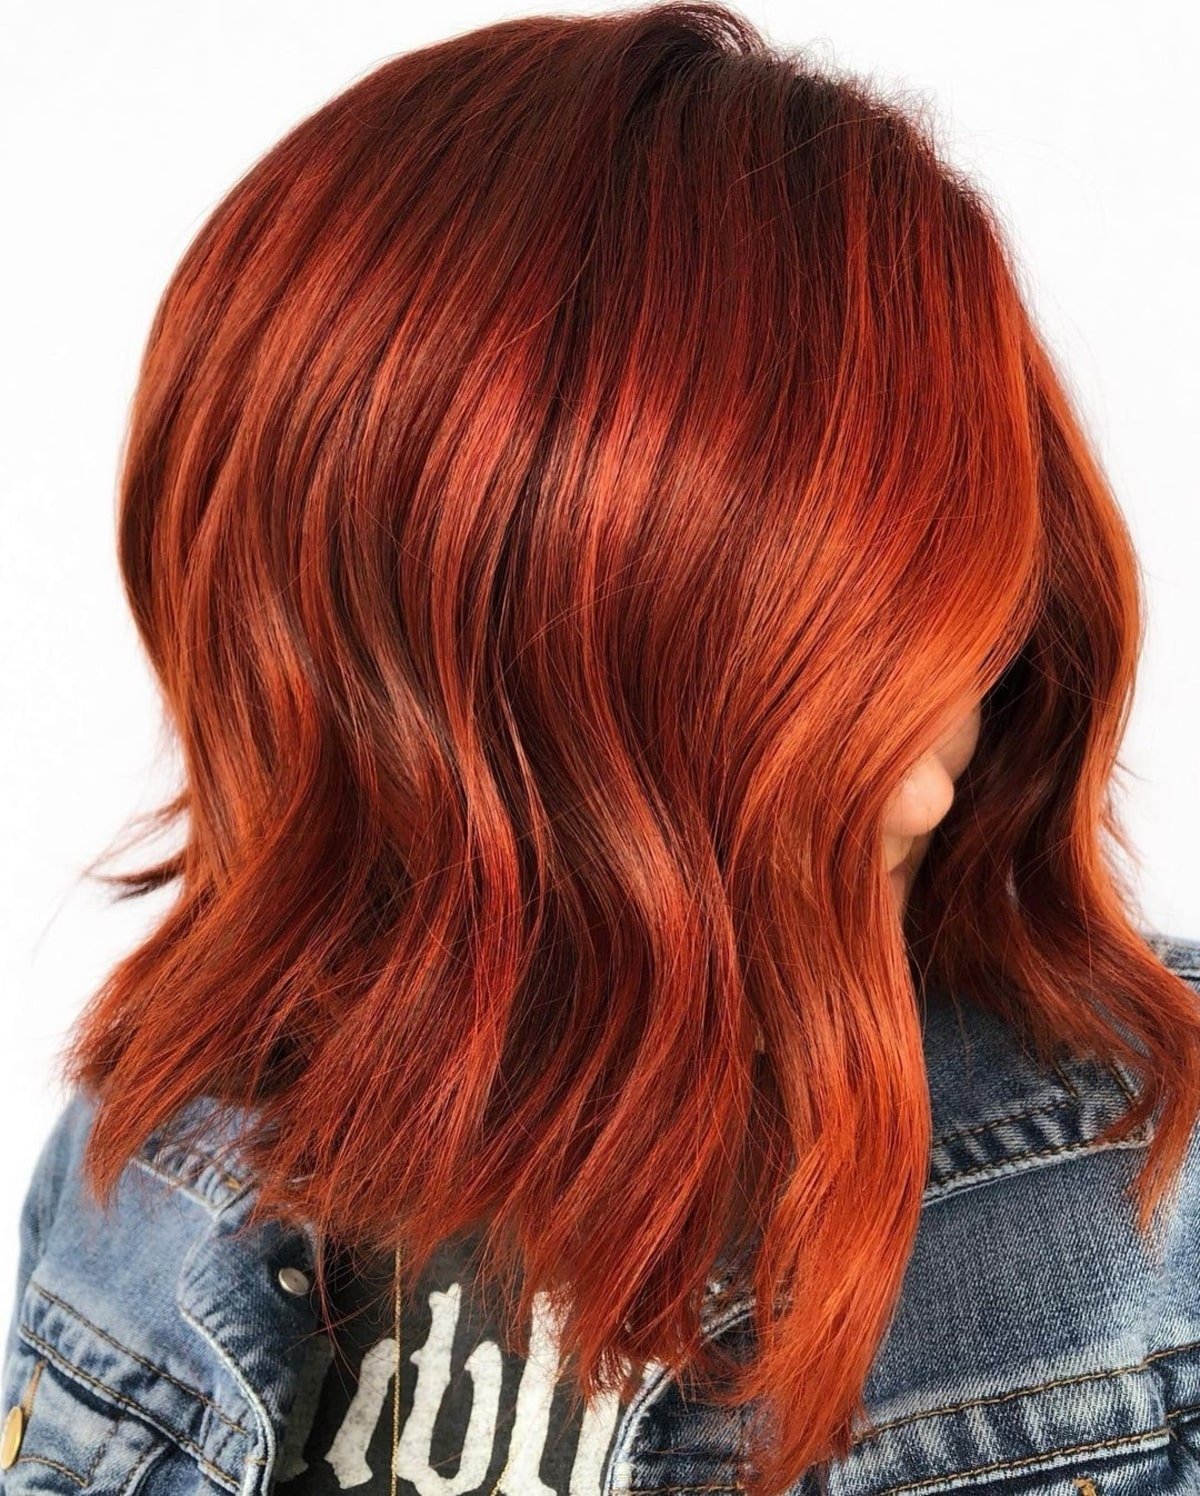 Garnier Hair Color Natural Crème Shade No.6.66 Intense Red